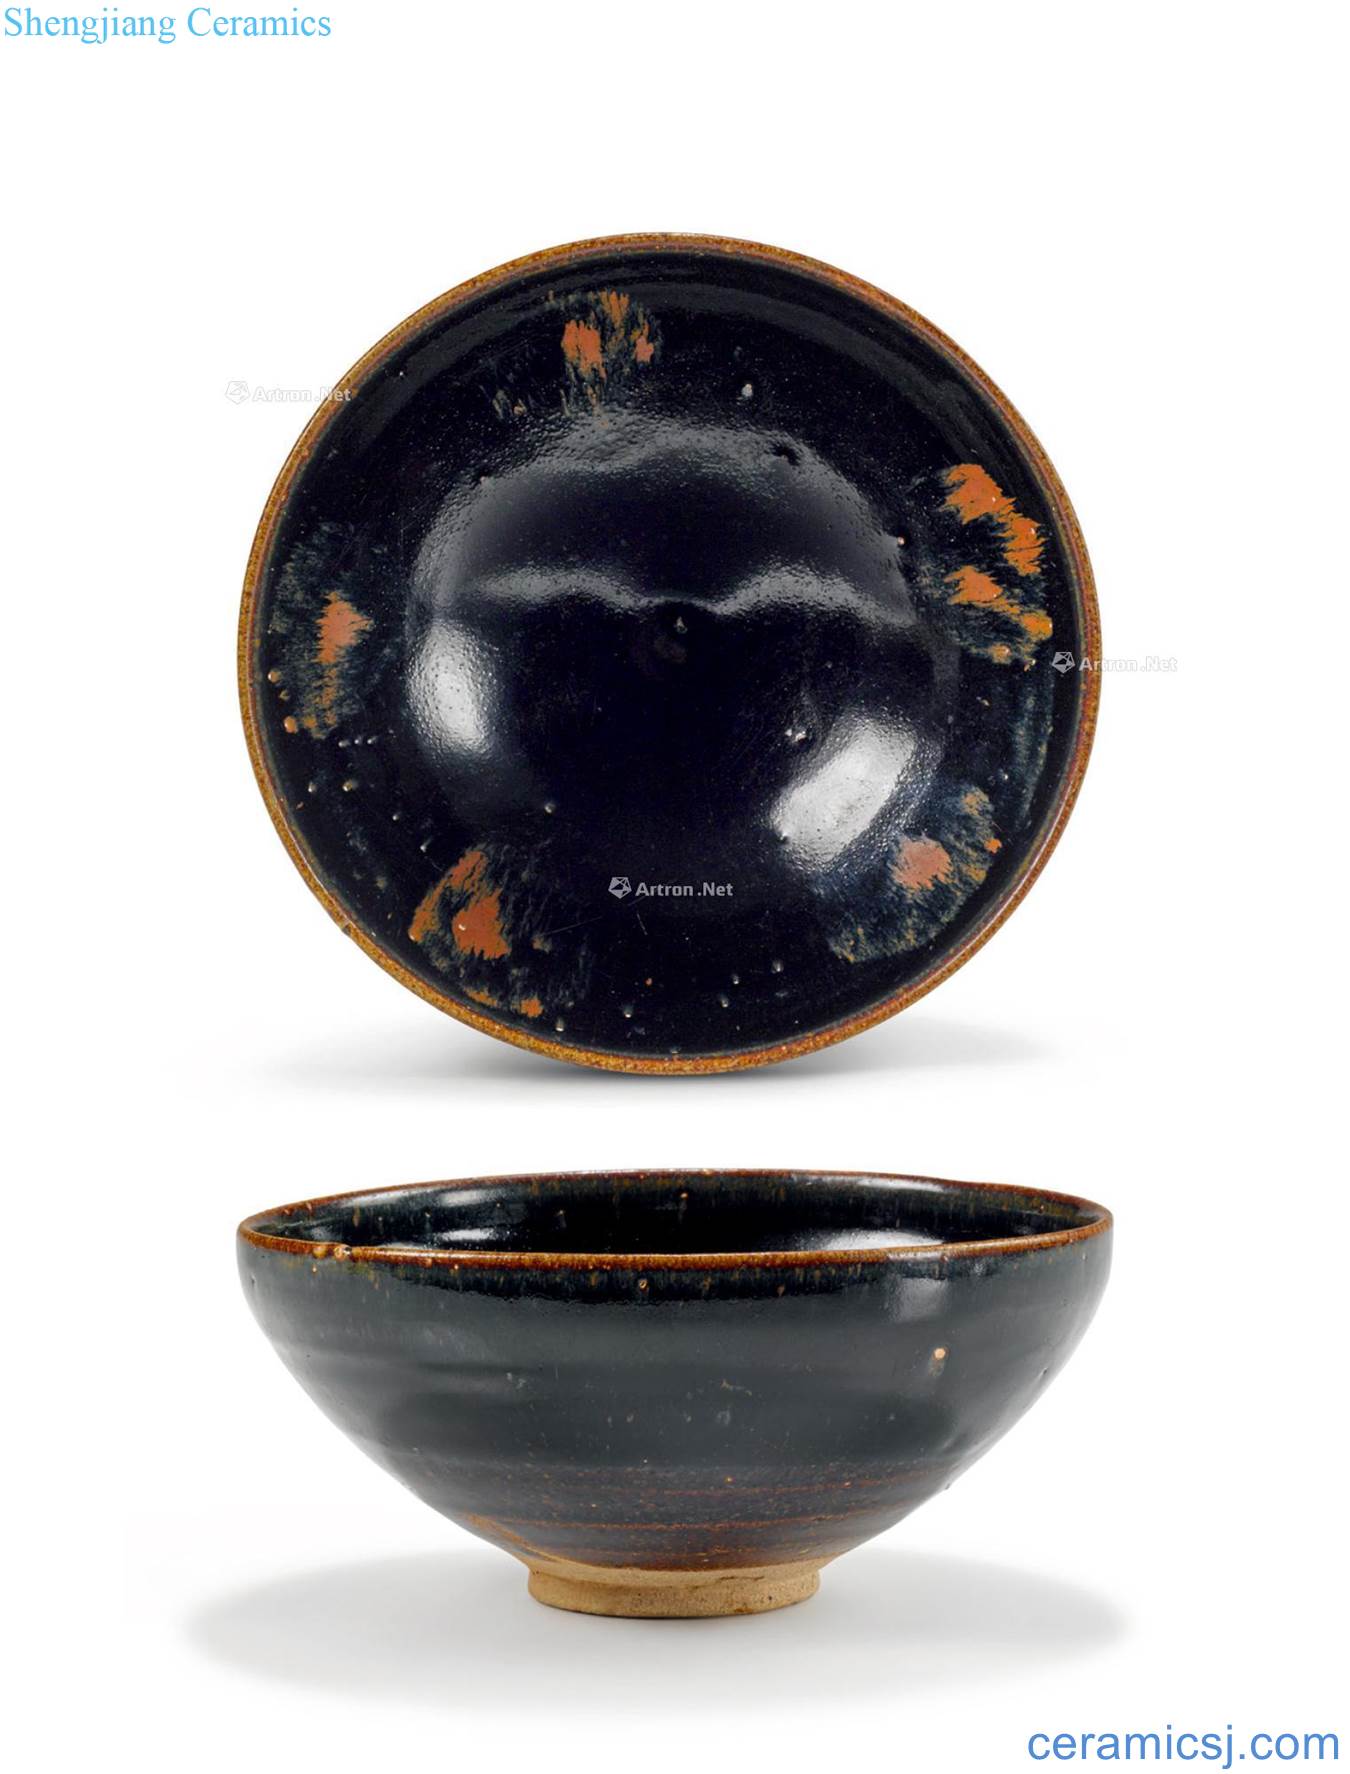 The song dynasty Henan black glazed sauce bowl